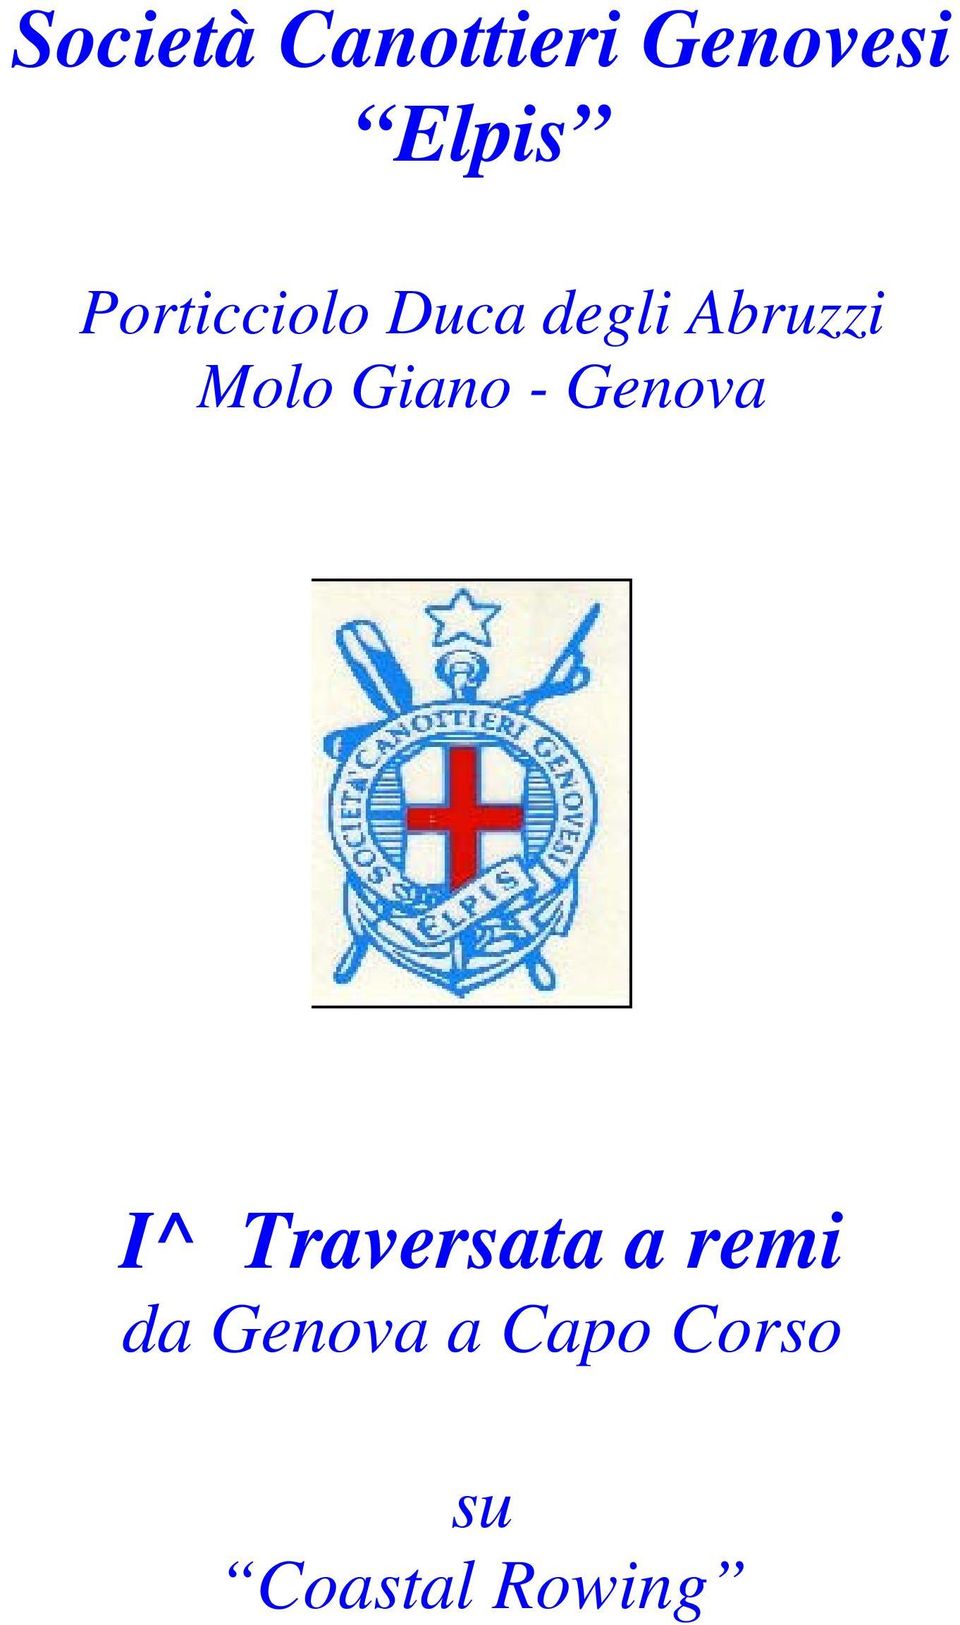 Giano - Genova I^ Traversata a remi